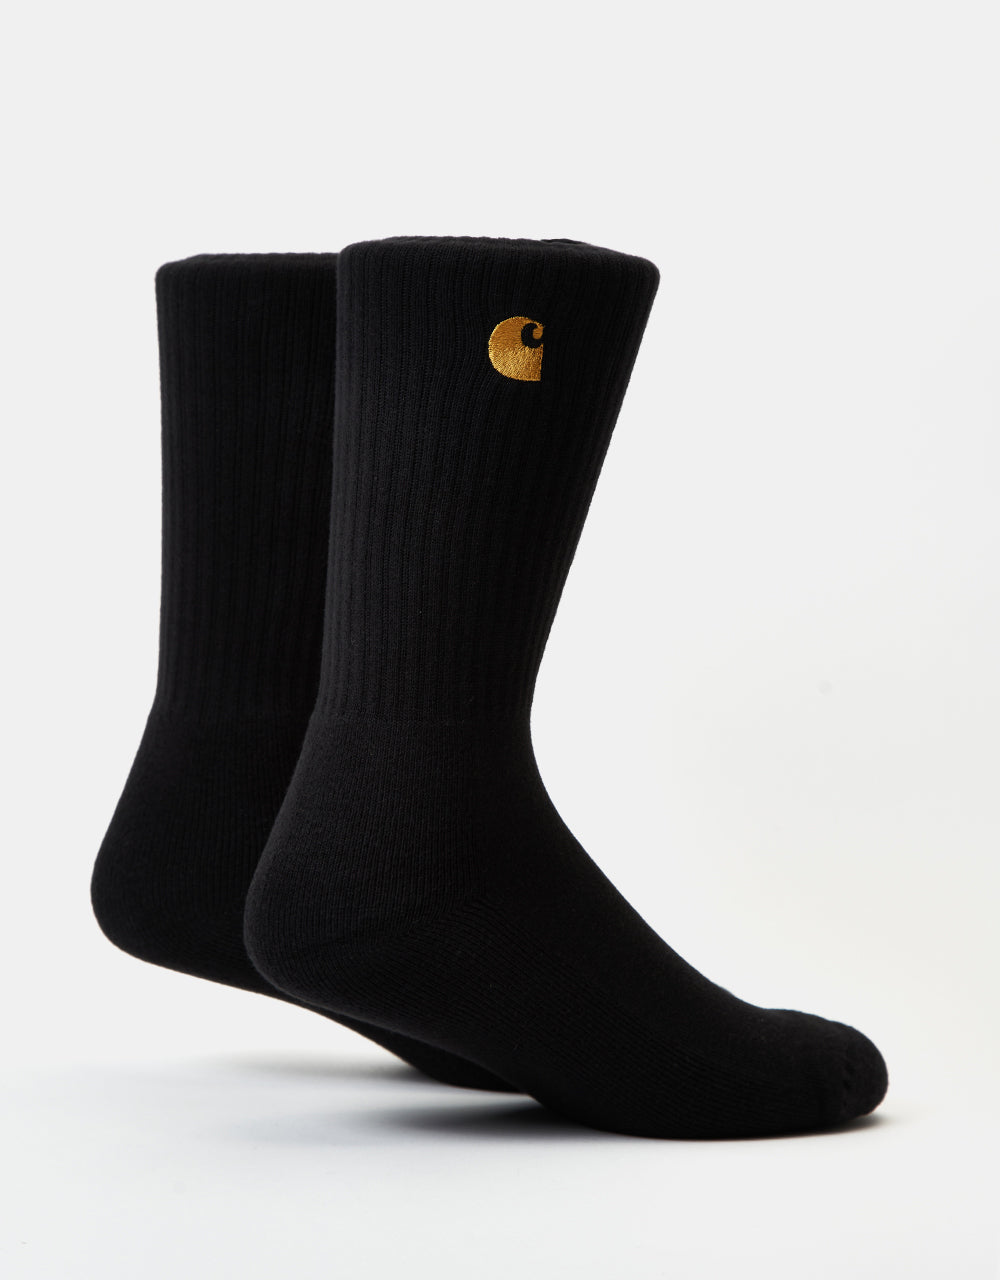 Carhartt WIP Chase Socks - Black/Gold